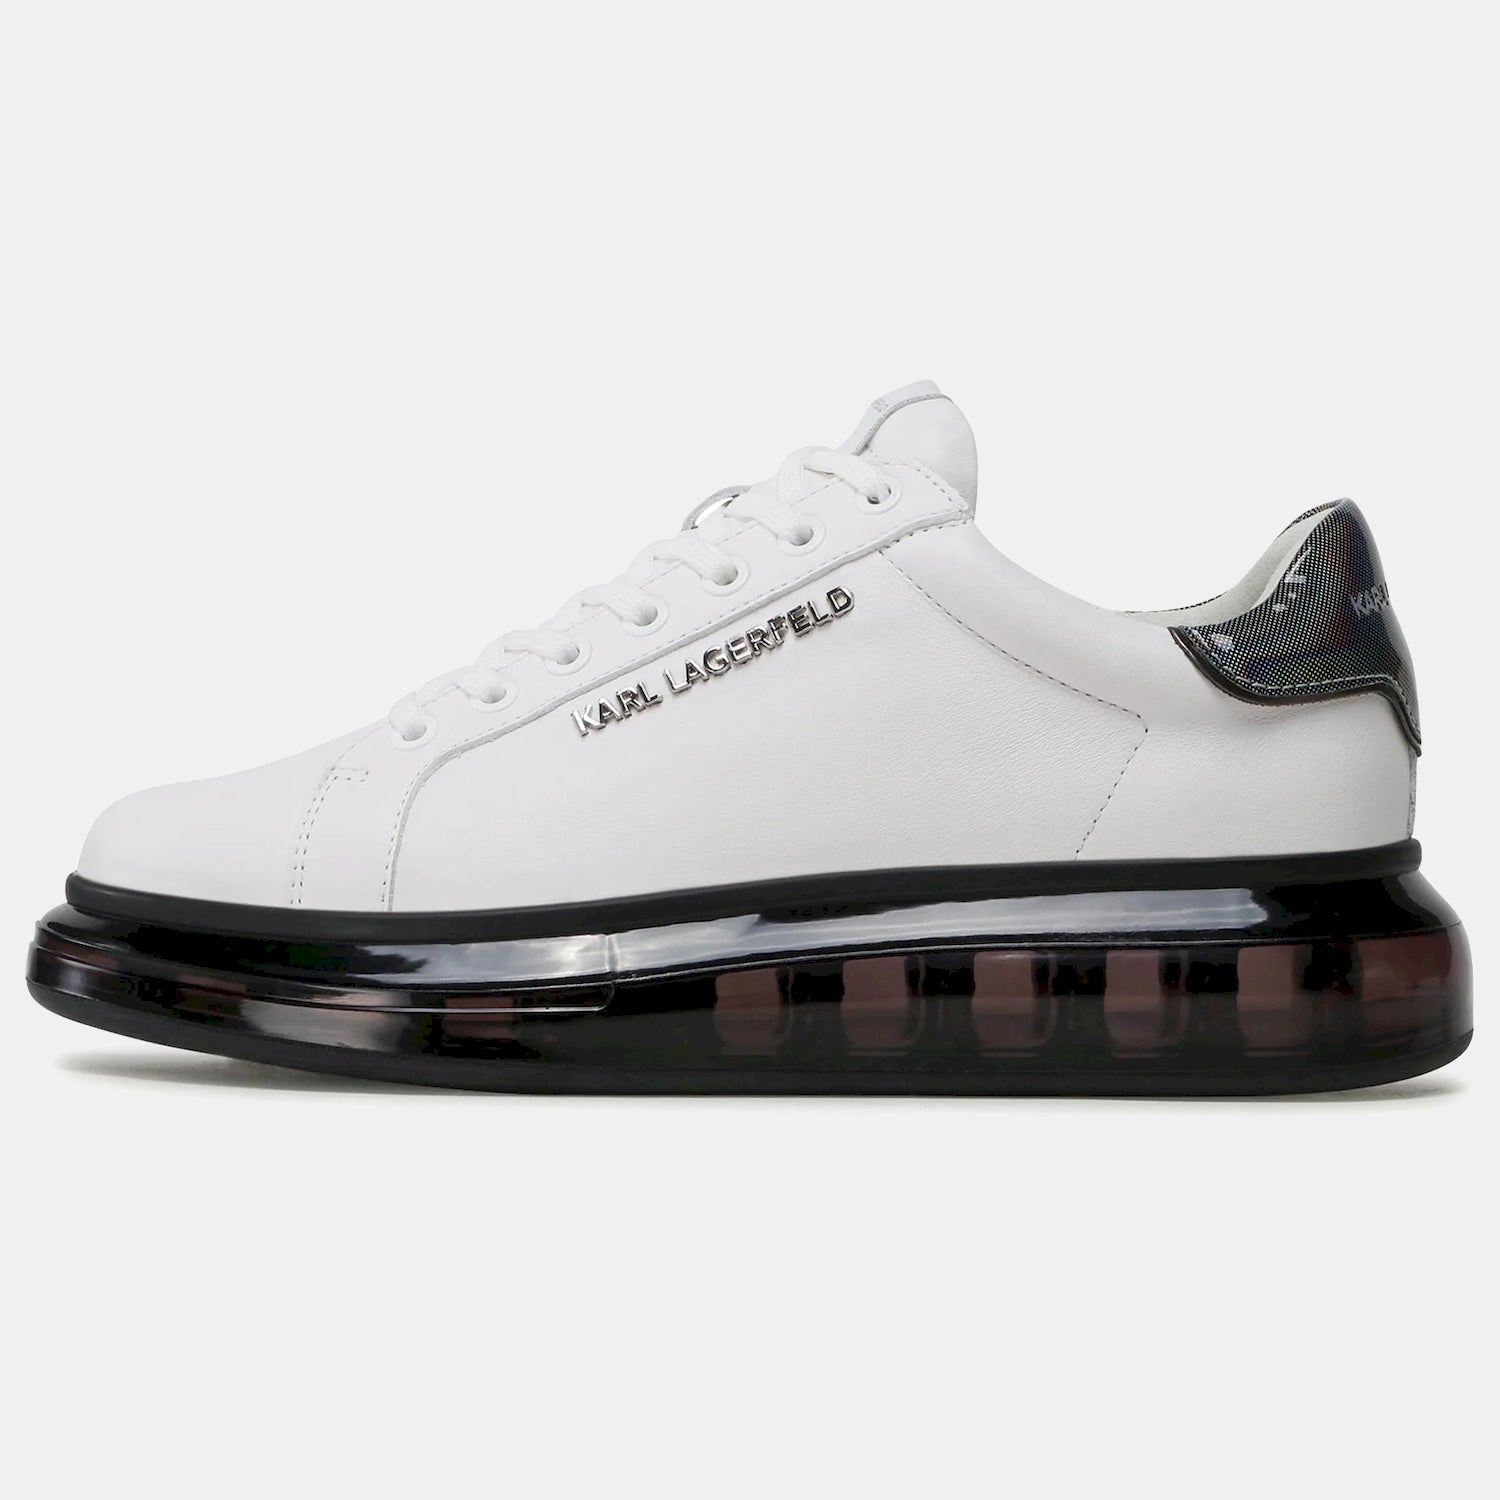 Karl Lagerfeld Sapatilhas Sneakers Shoes Kl52625 Whi Black Branco Preto_shot4